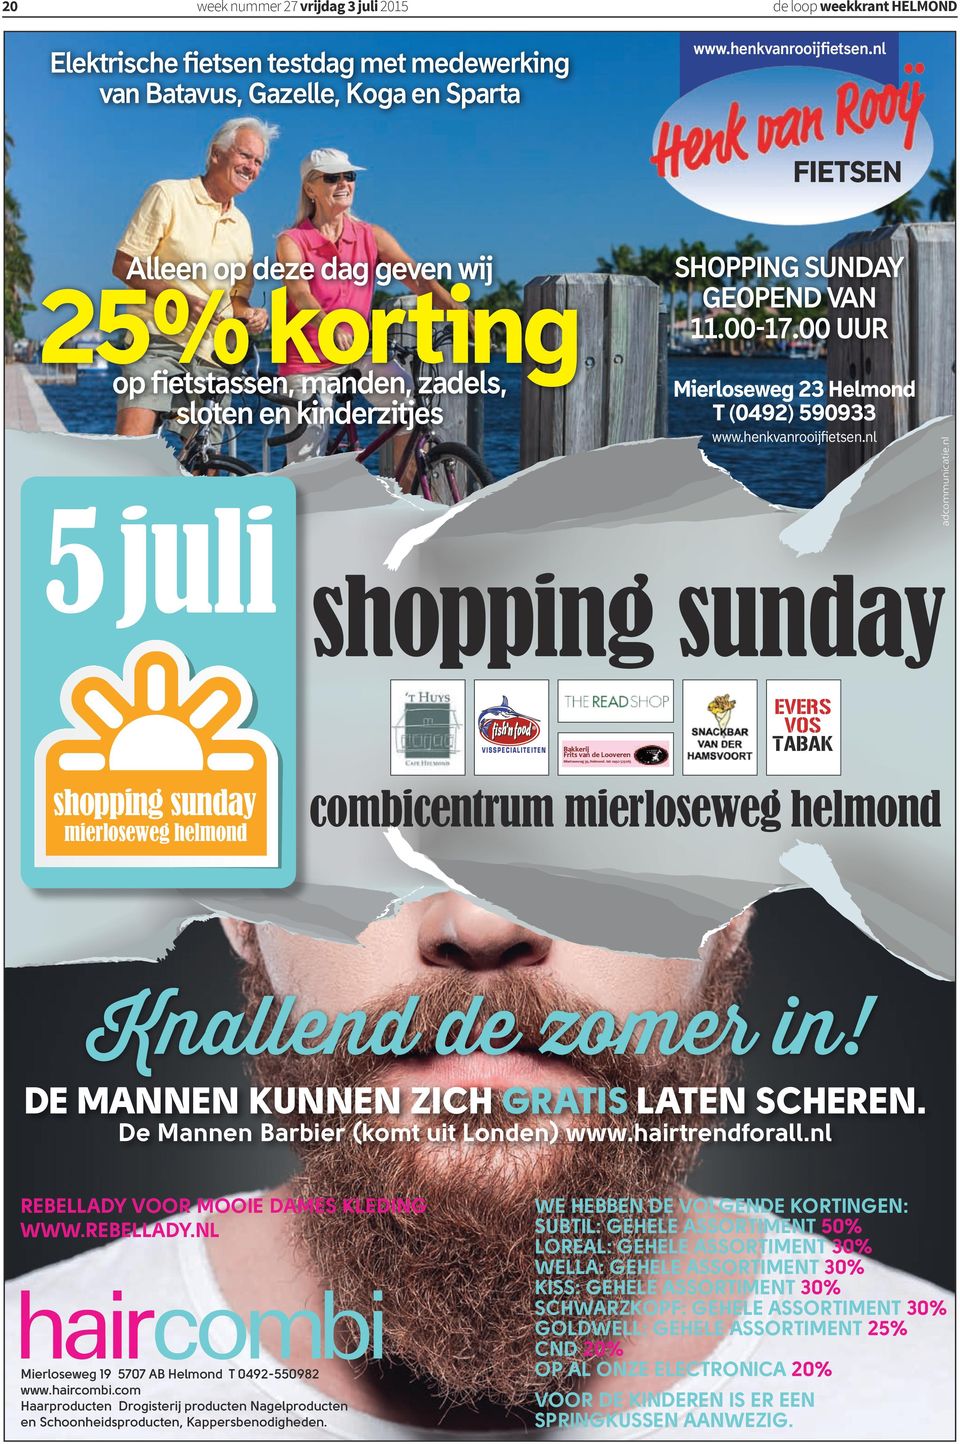 00 UUR Mierloseweg 23 Helmond T (0492) 590933 www.henkvanrooijfietsen.nl shopping sunday adcommunicatie.